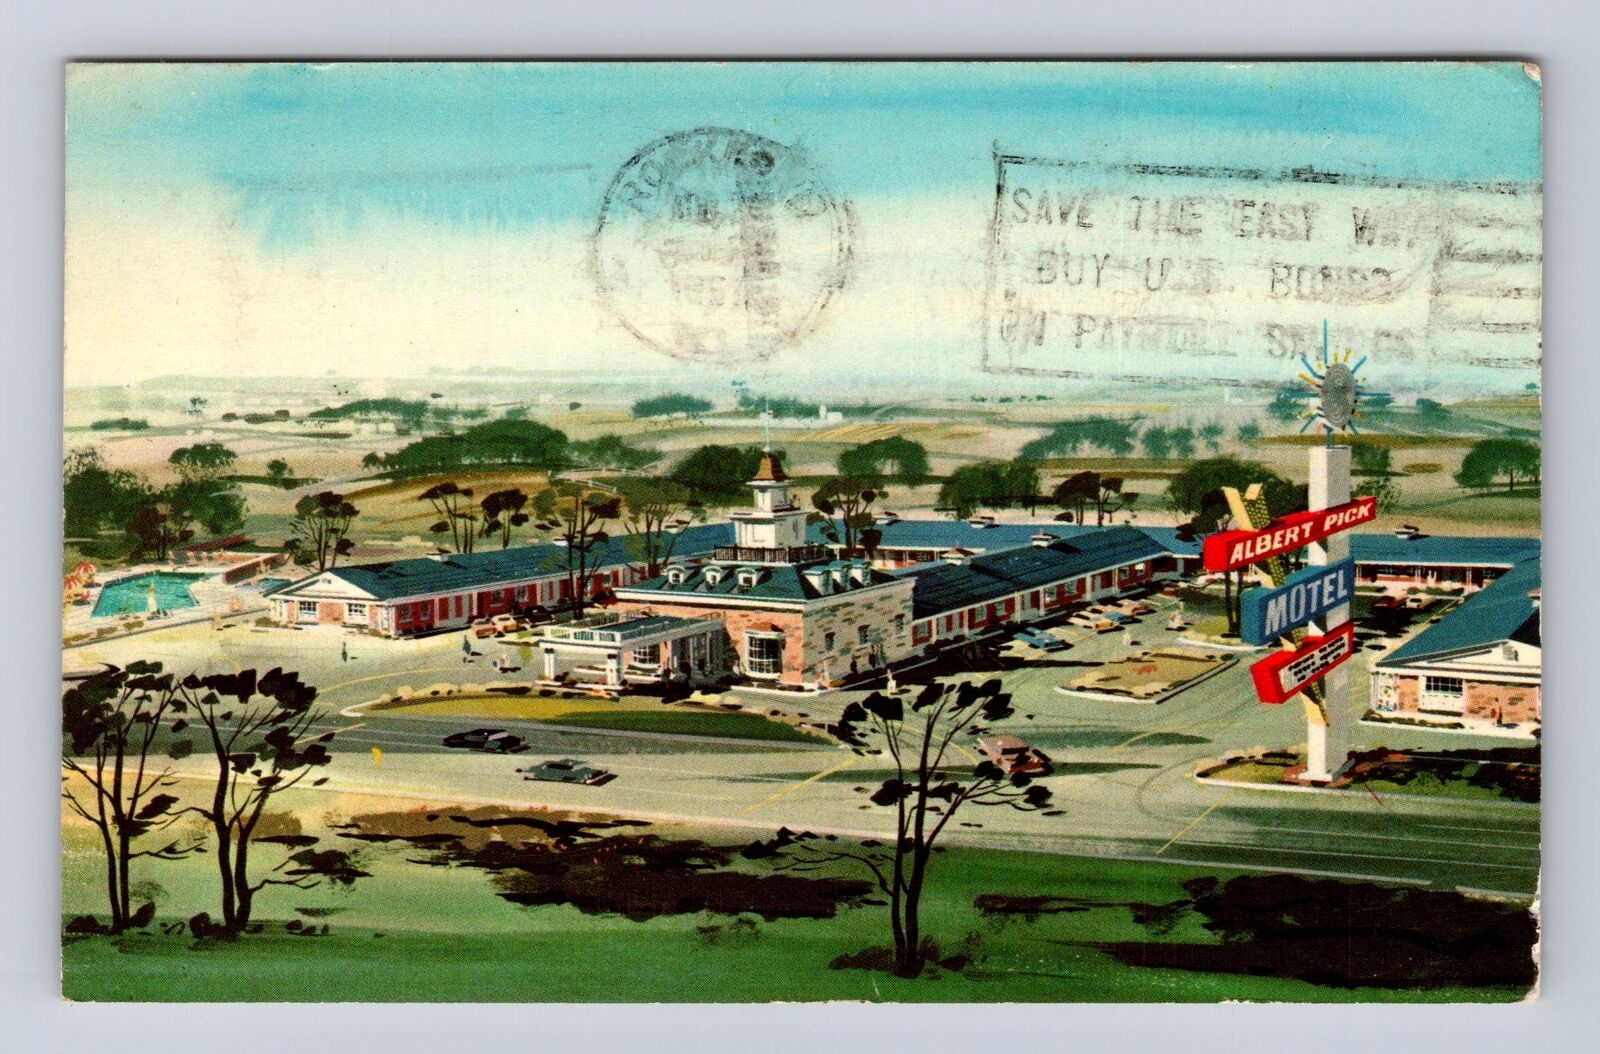 Rockford IL-Illinois, Albert Pick Motel, Advertisement, Vintage c1963 Postcard